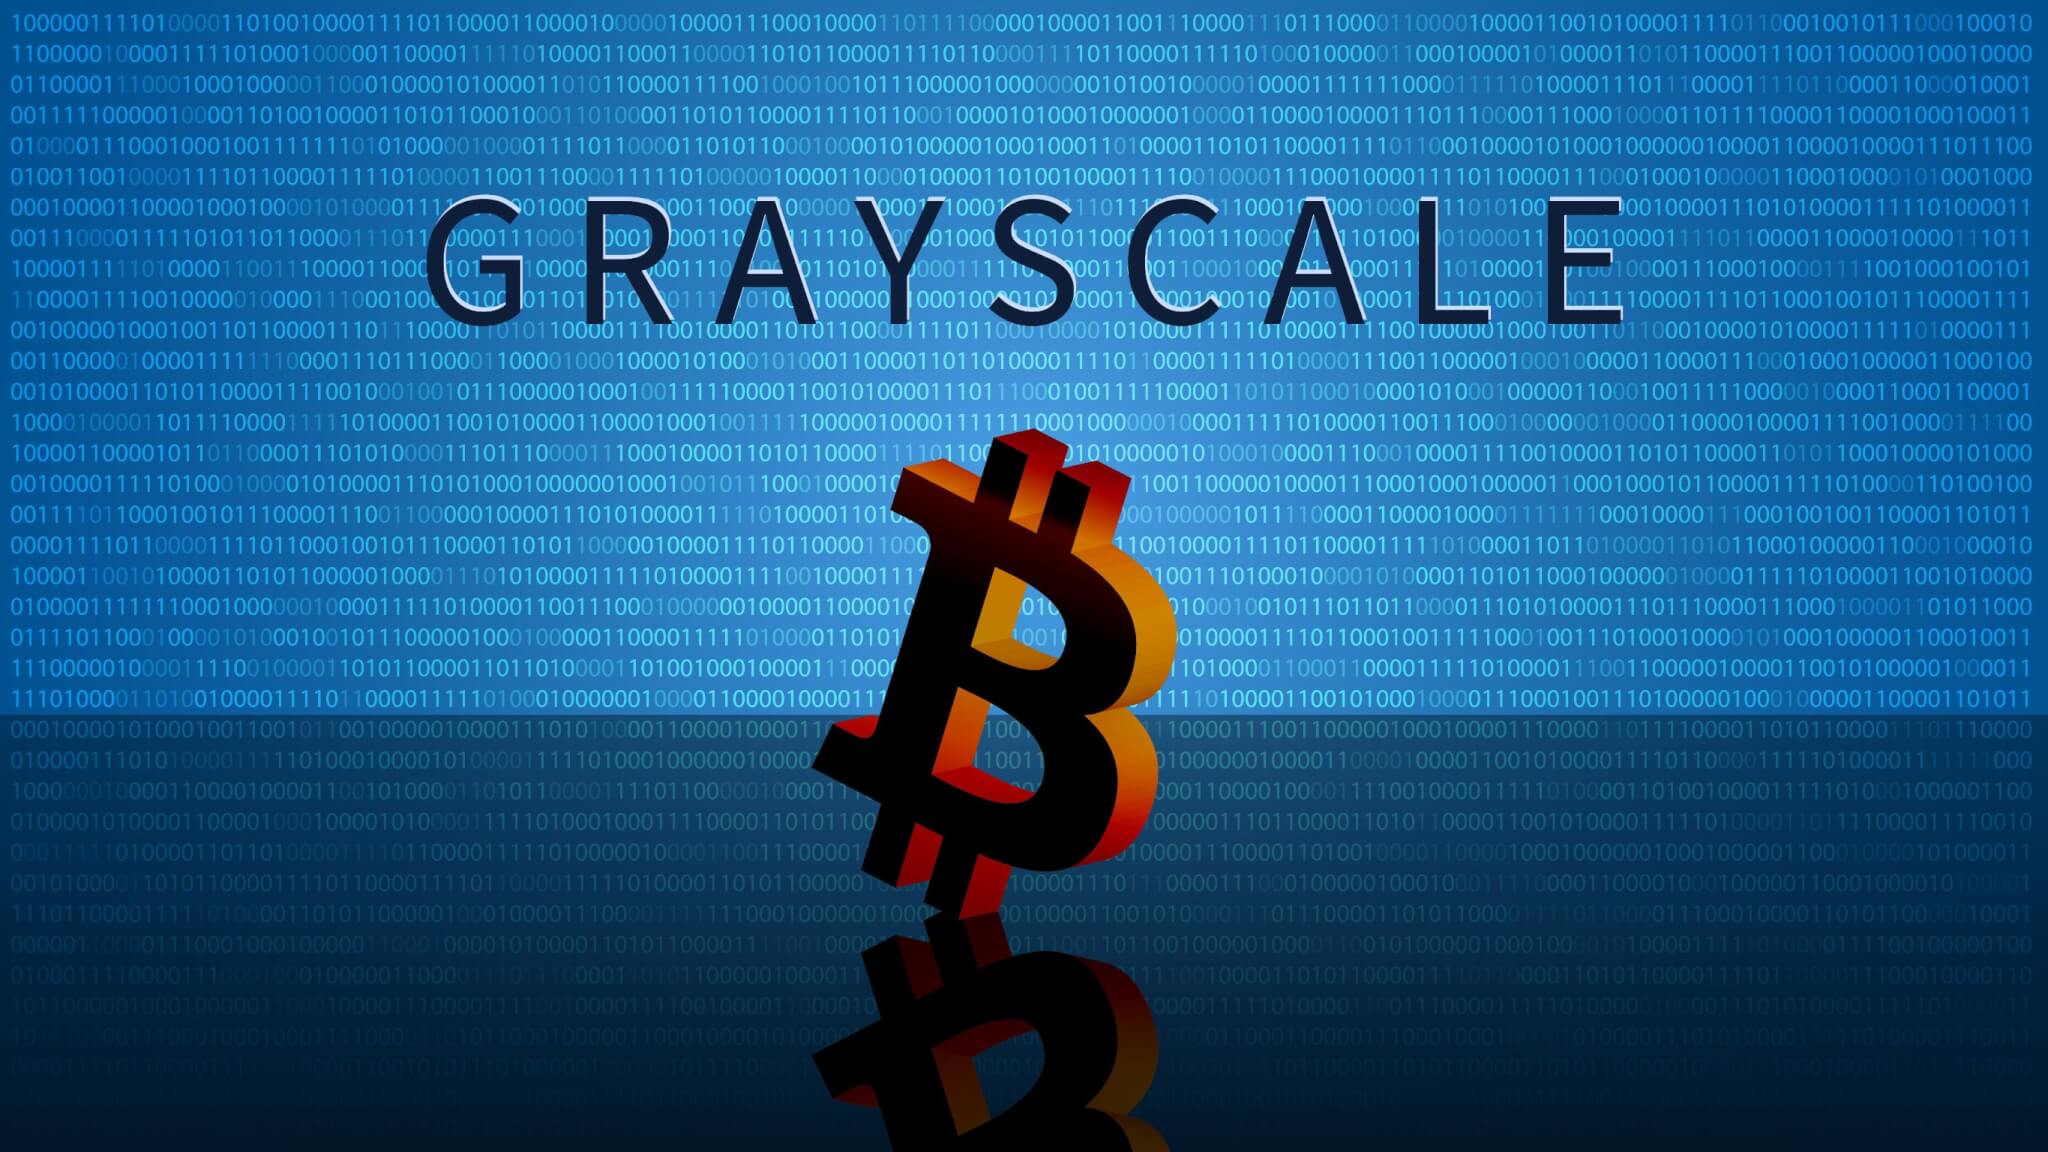 grayscale win against sec in bitcoin etf case  Grayscale secures a big win against SEC in Bitcoin ETF case 185290871 m normal none min